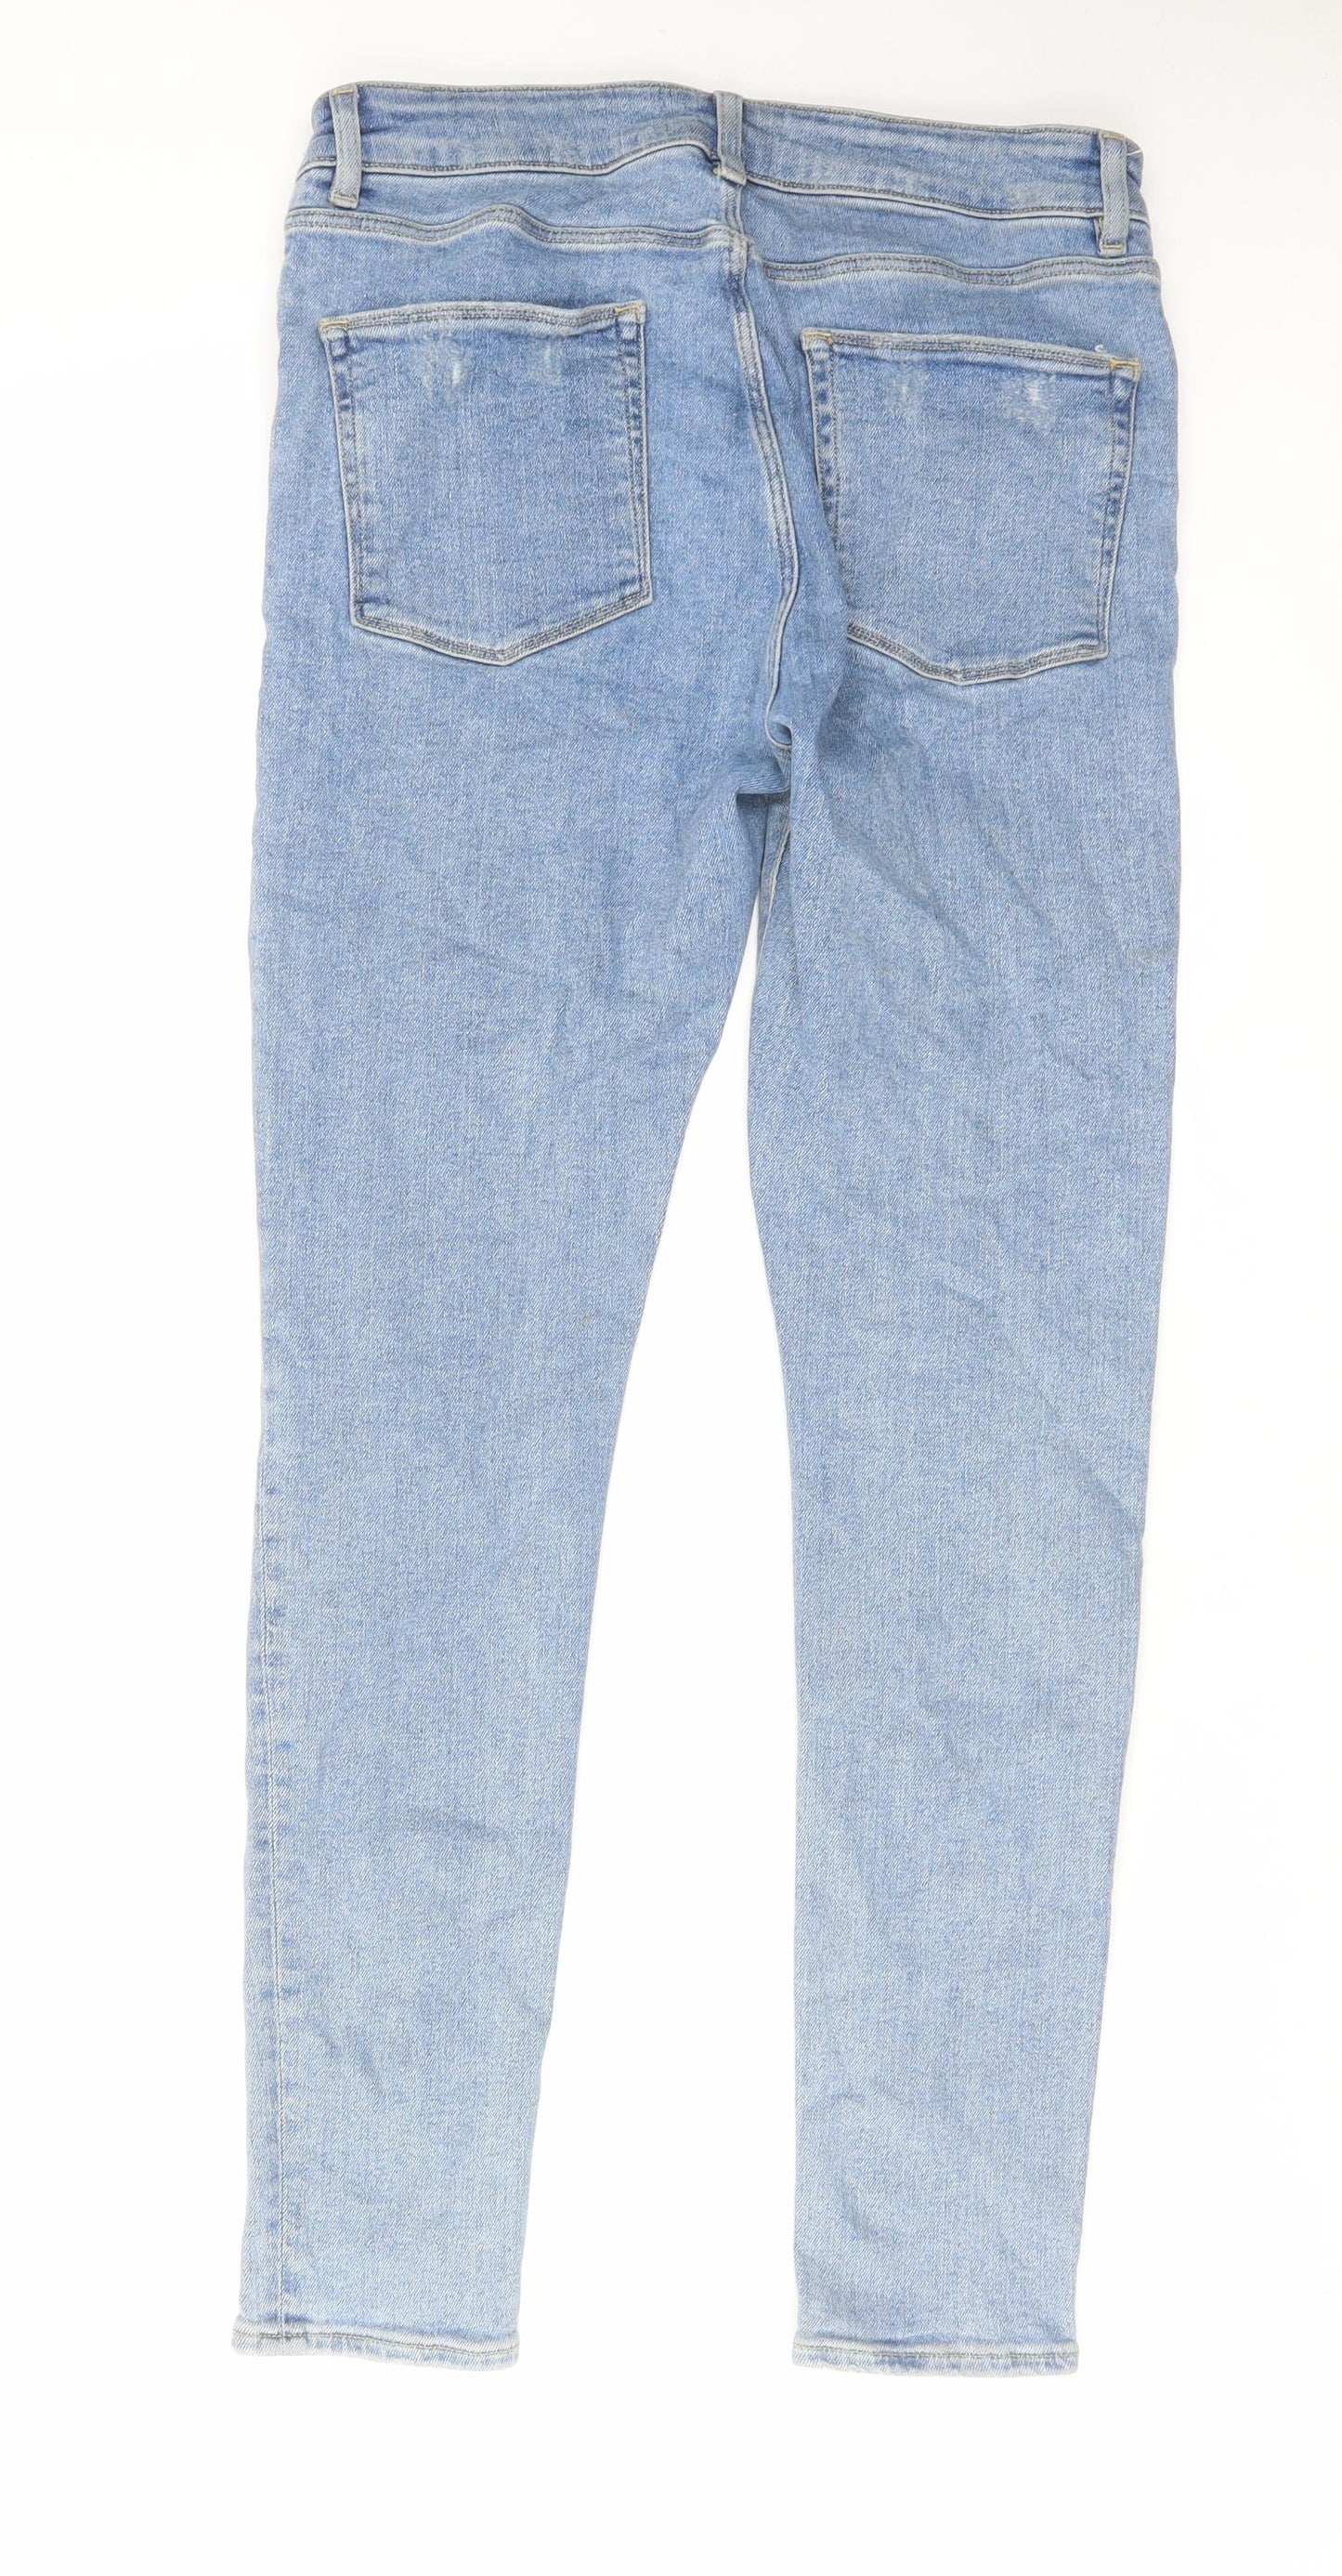 ASOS Womens Blue Cotton Skinny Jeans Size 32 in L32 in Regular Zip